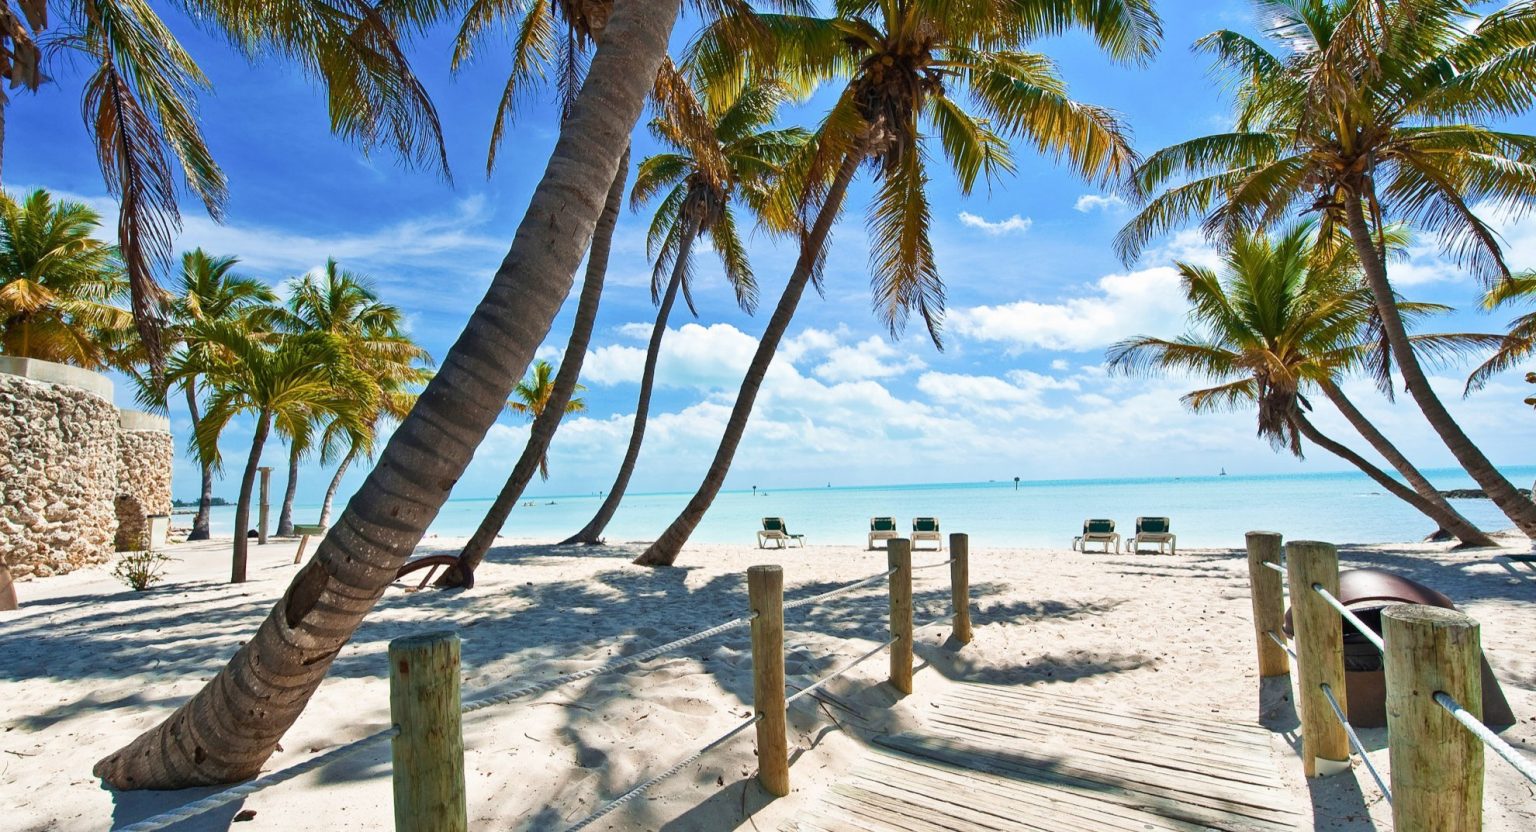 Key West A Travel Destination With An Island Feel